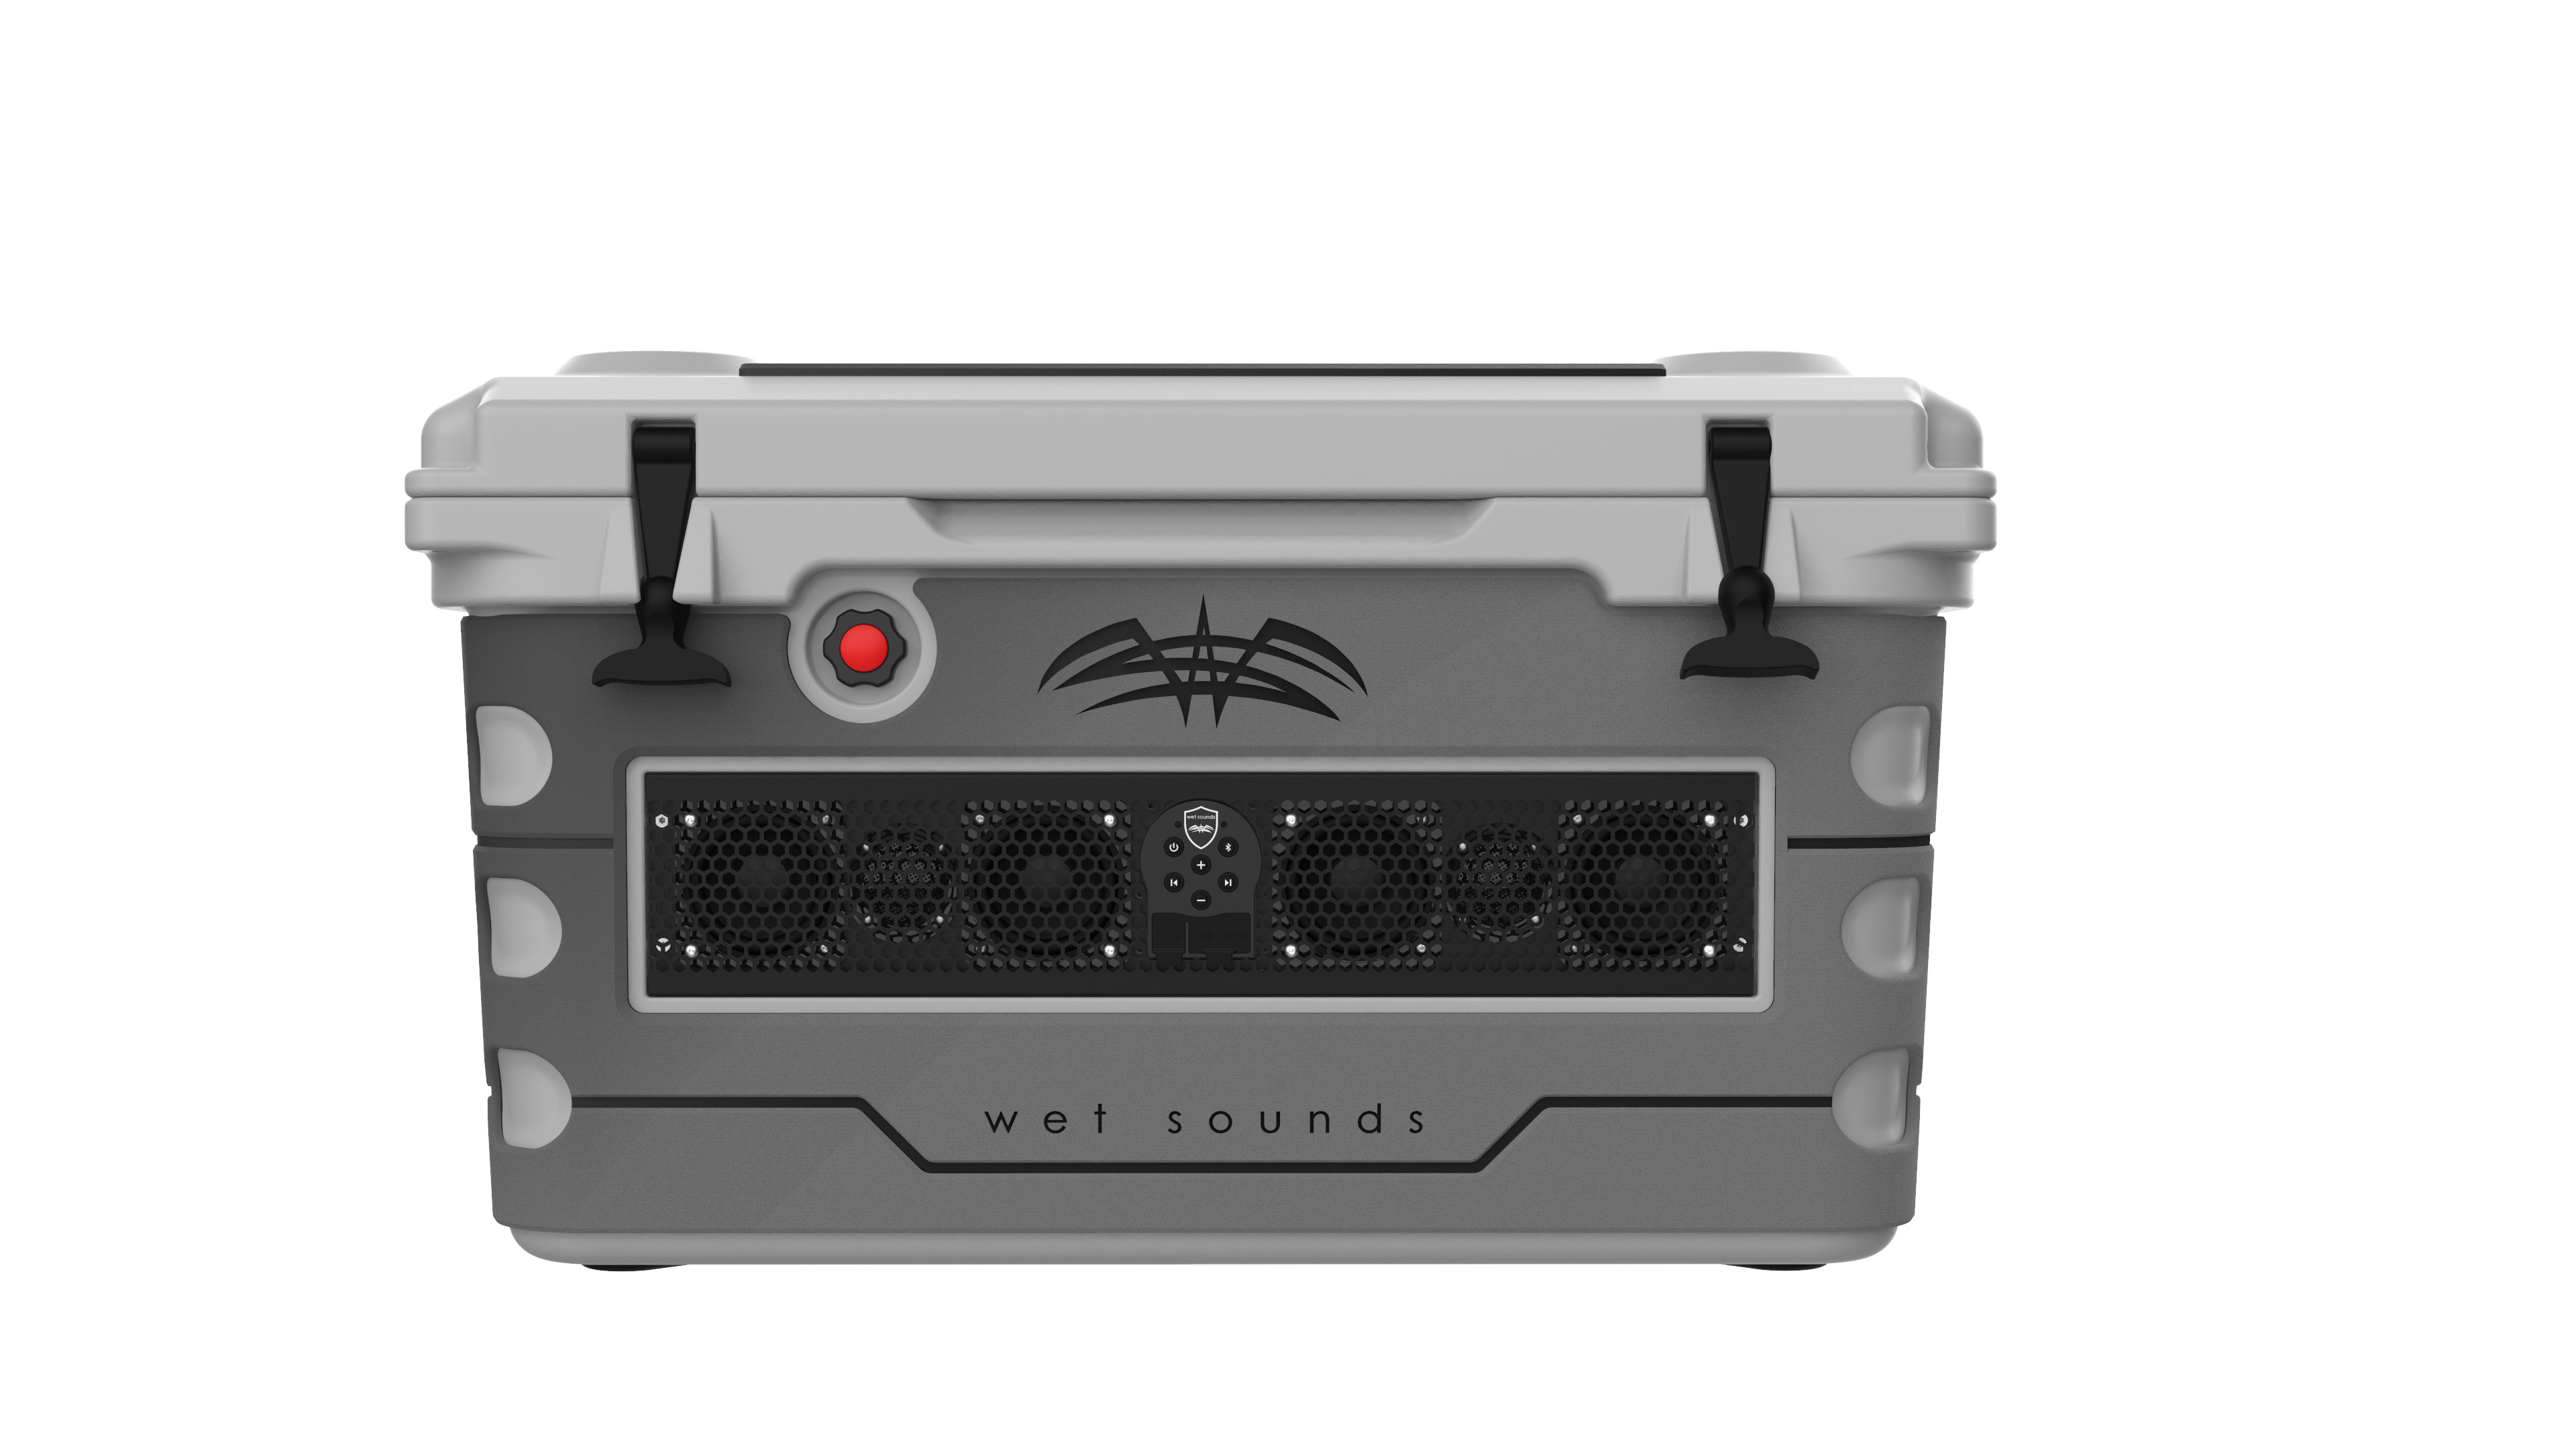 Wet Sounds Stealth SHIVR-55-GRY Gray High Output Audio Cooler Speaker System  Full Gator Step Kit Gray Over Black